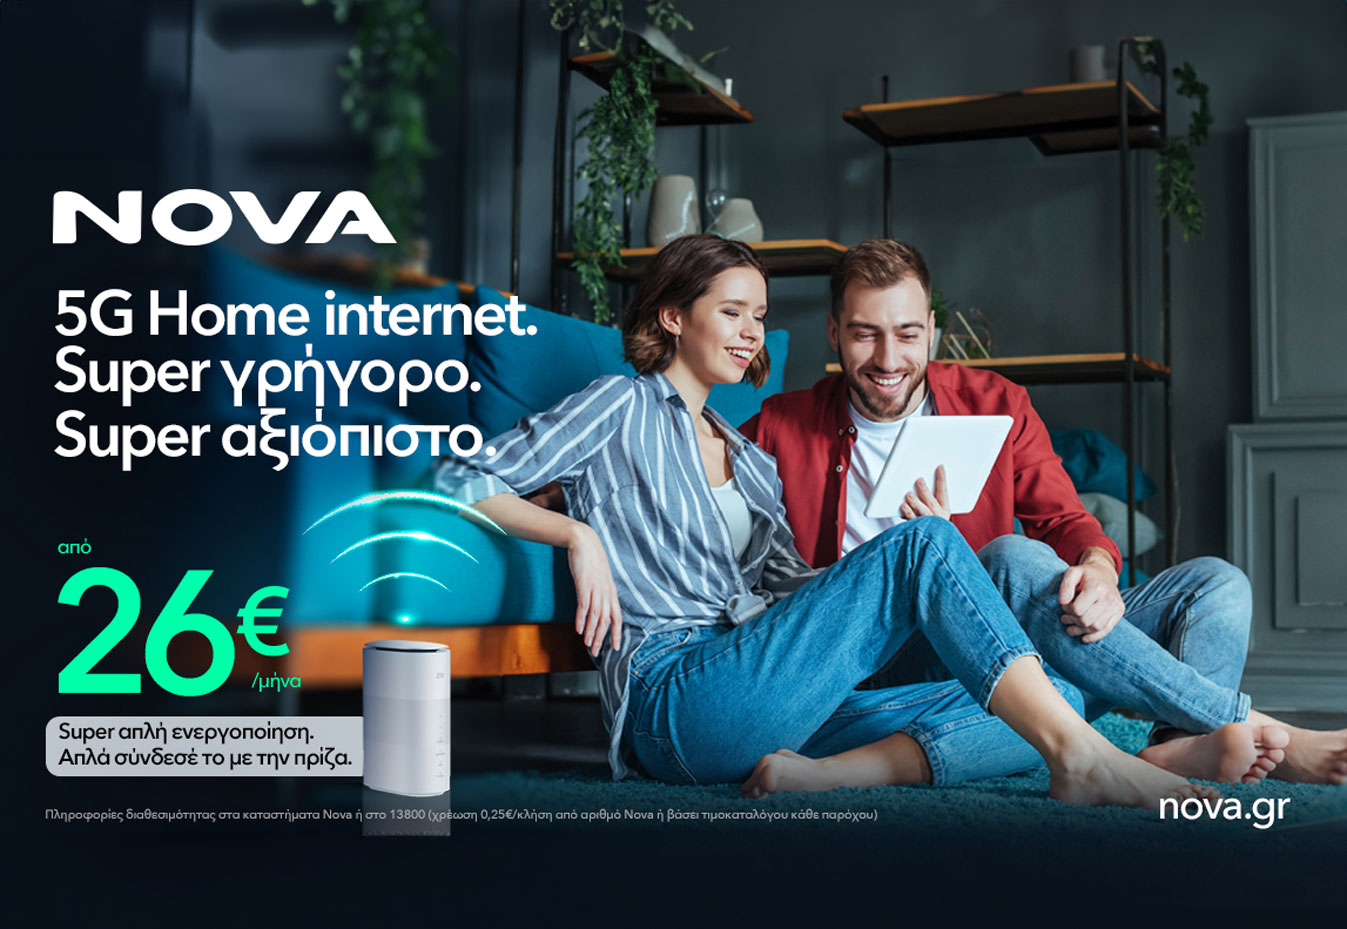 Nova 5G Home internet: Απίστευτα γρήγορο, απίστευτα αξιόπιστο, χωρίς εγκατάσταση! Plug n’ play από 26€/μήνα